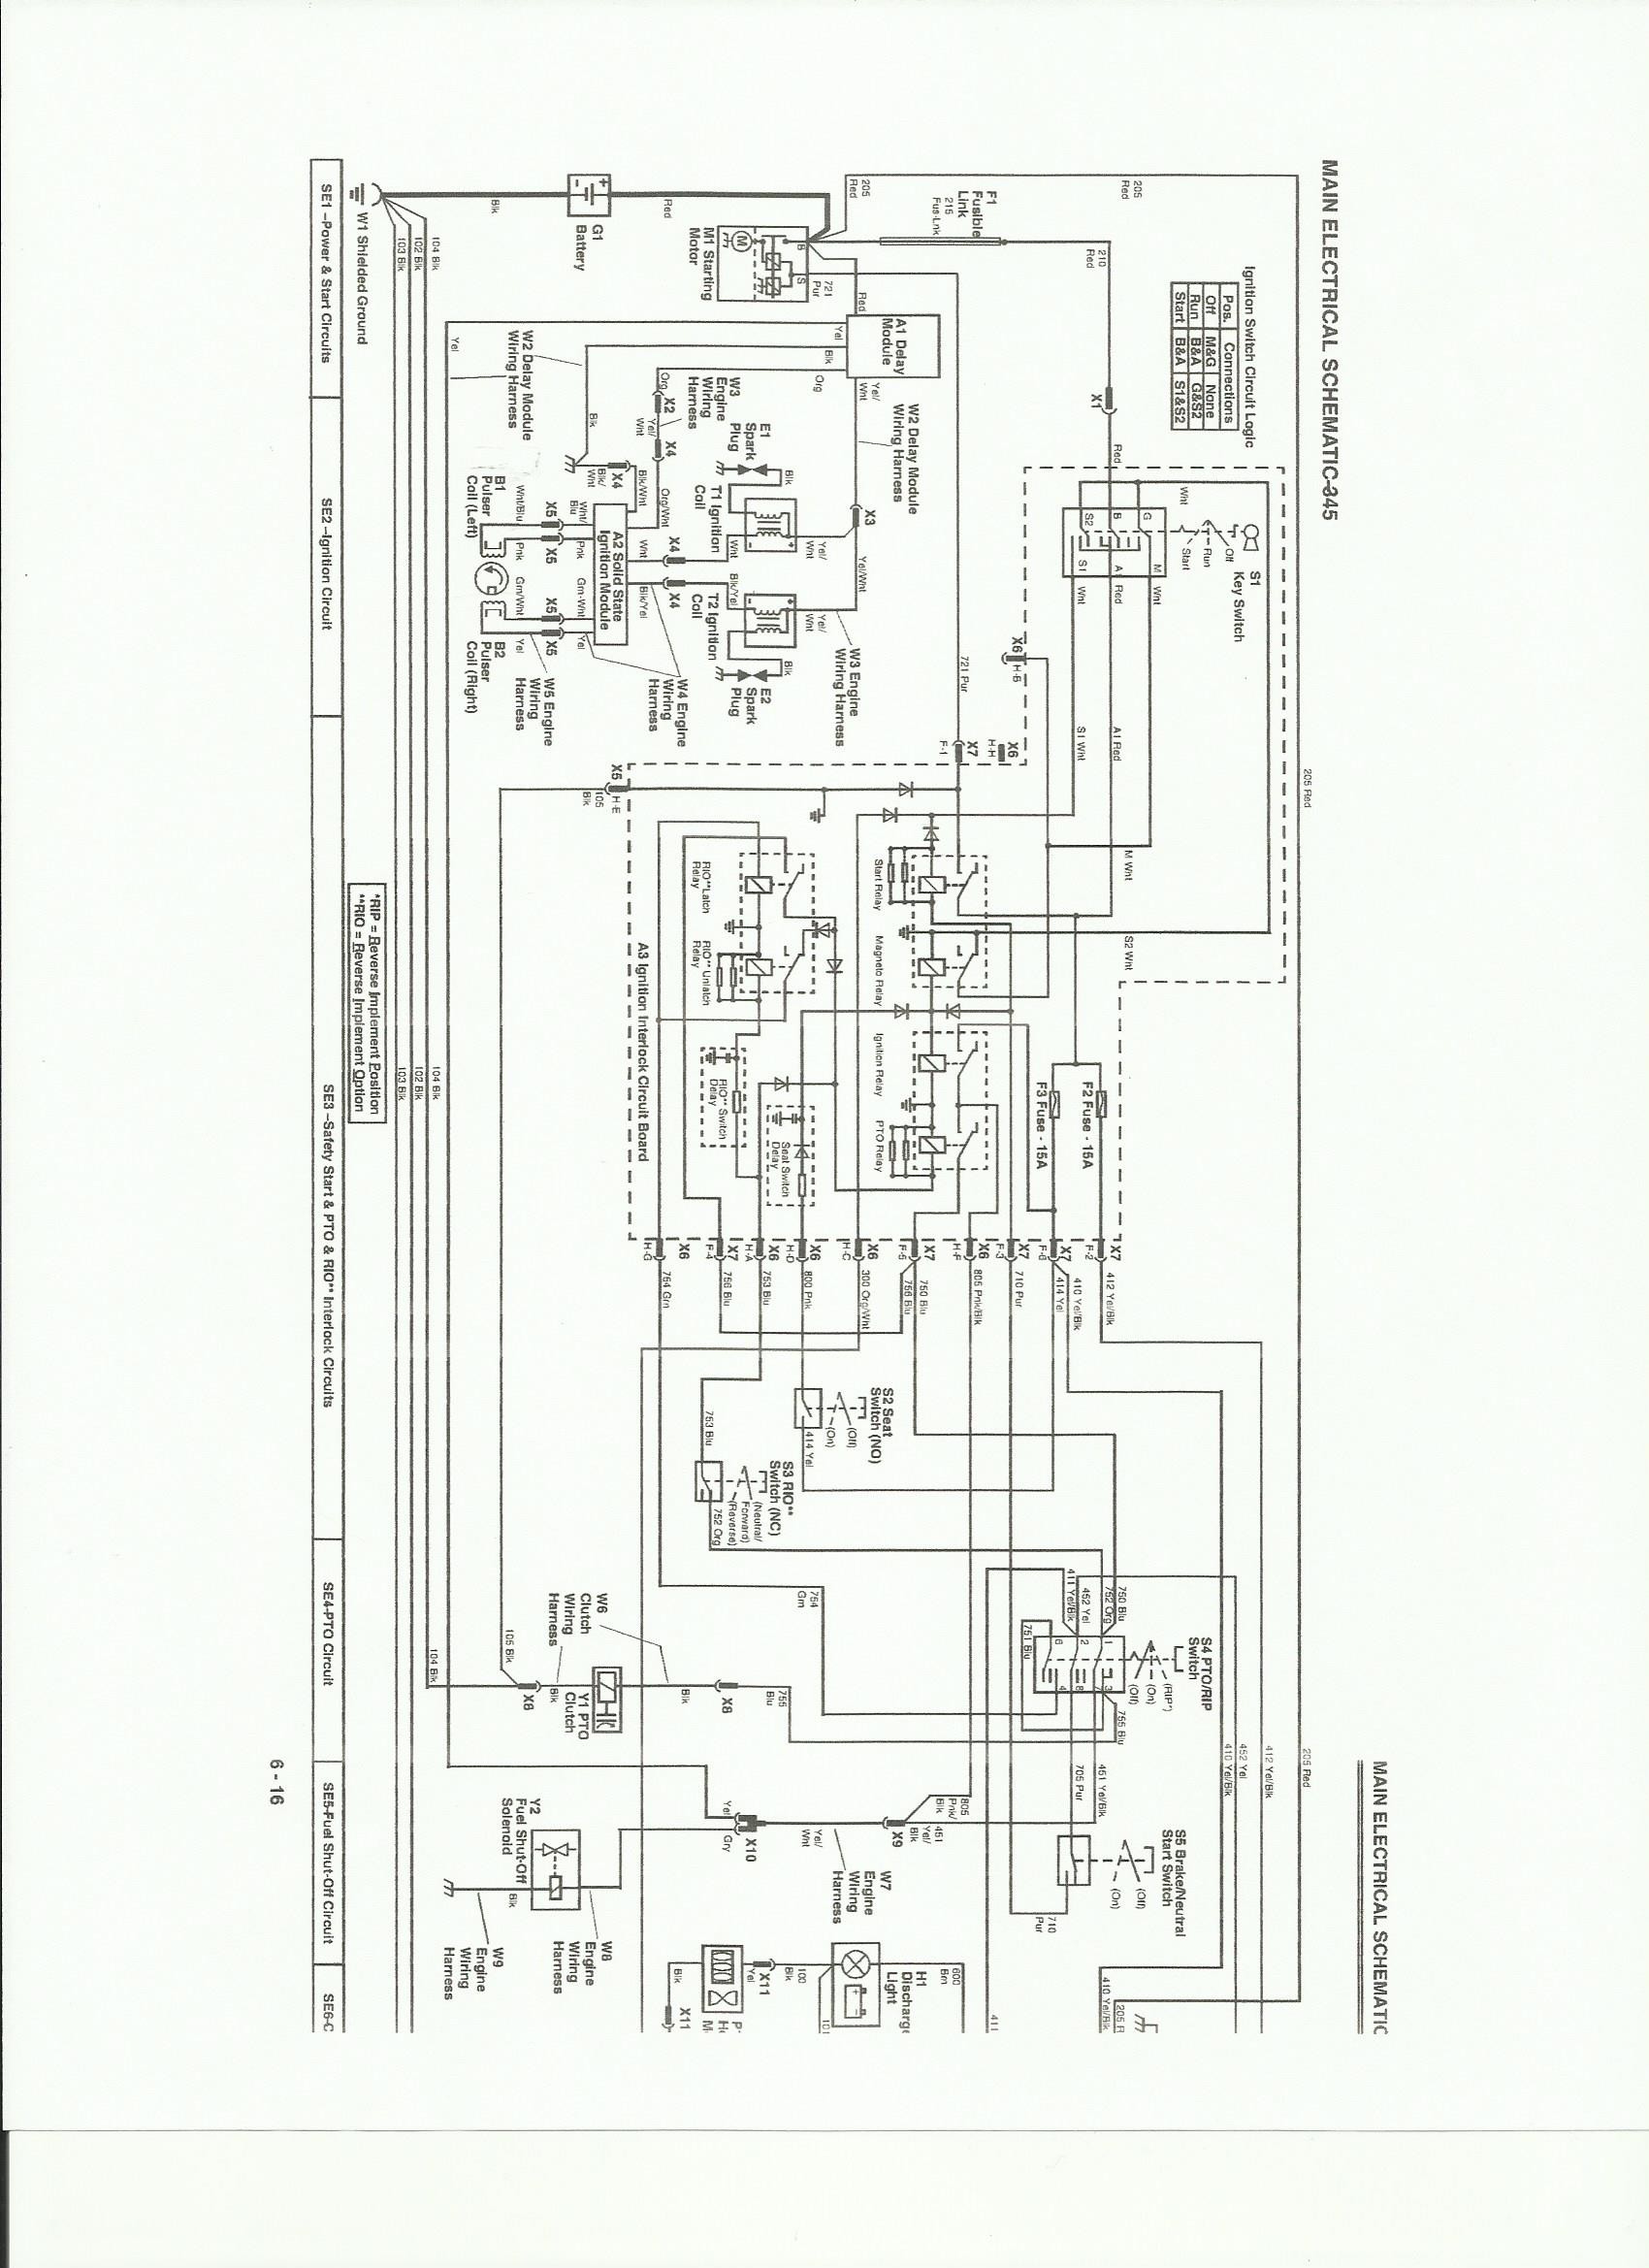 Wireing Diagram for John Deere 345 4726 John Deere 345 Engine Wiring Schematic Of Wireing Diagram for John Deere 345